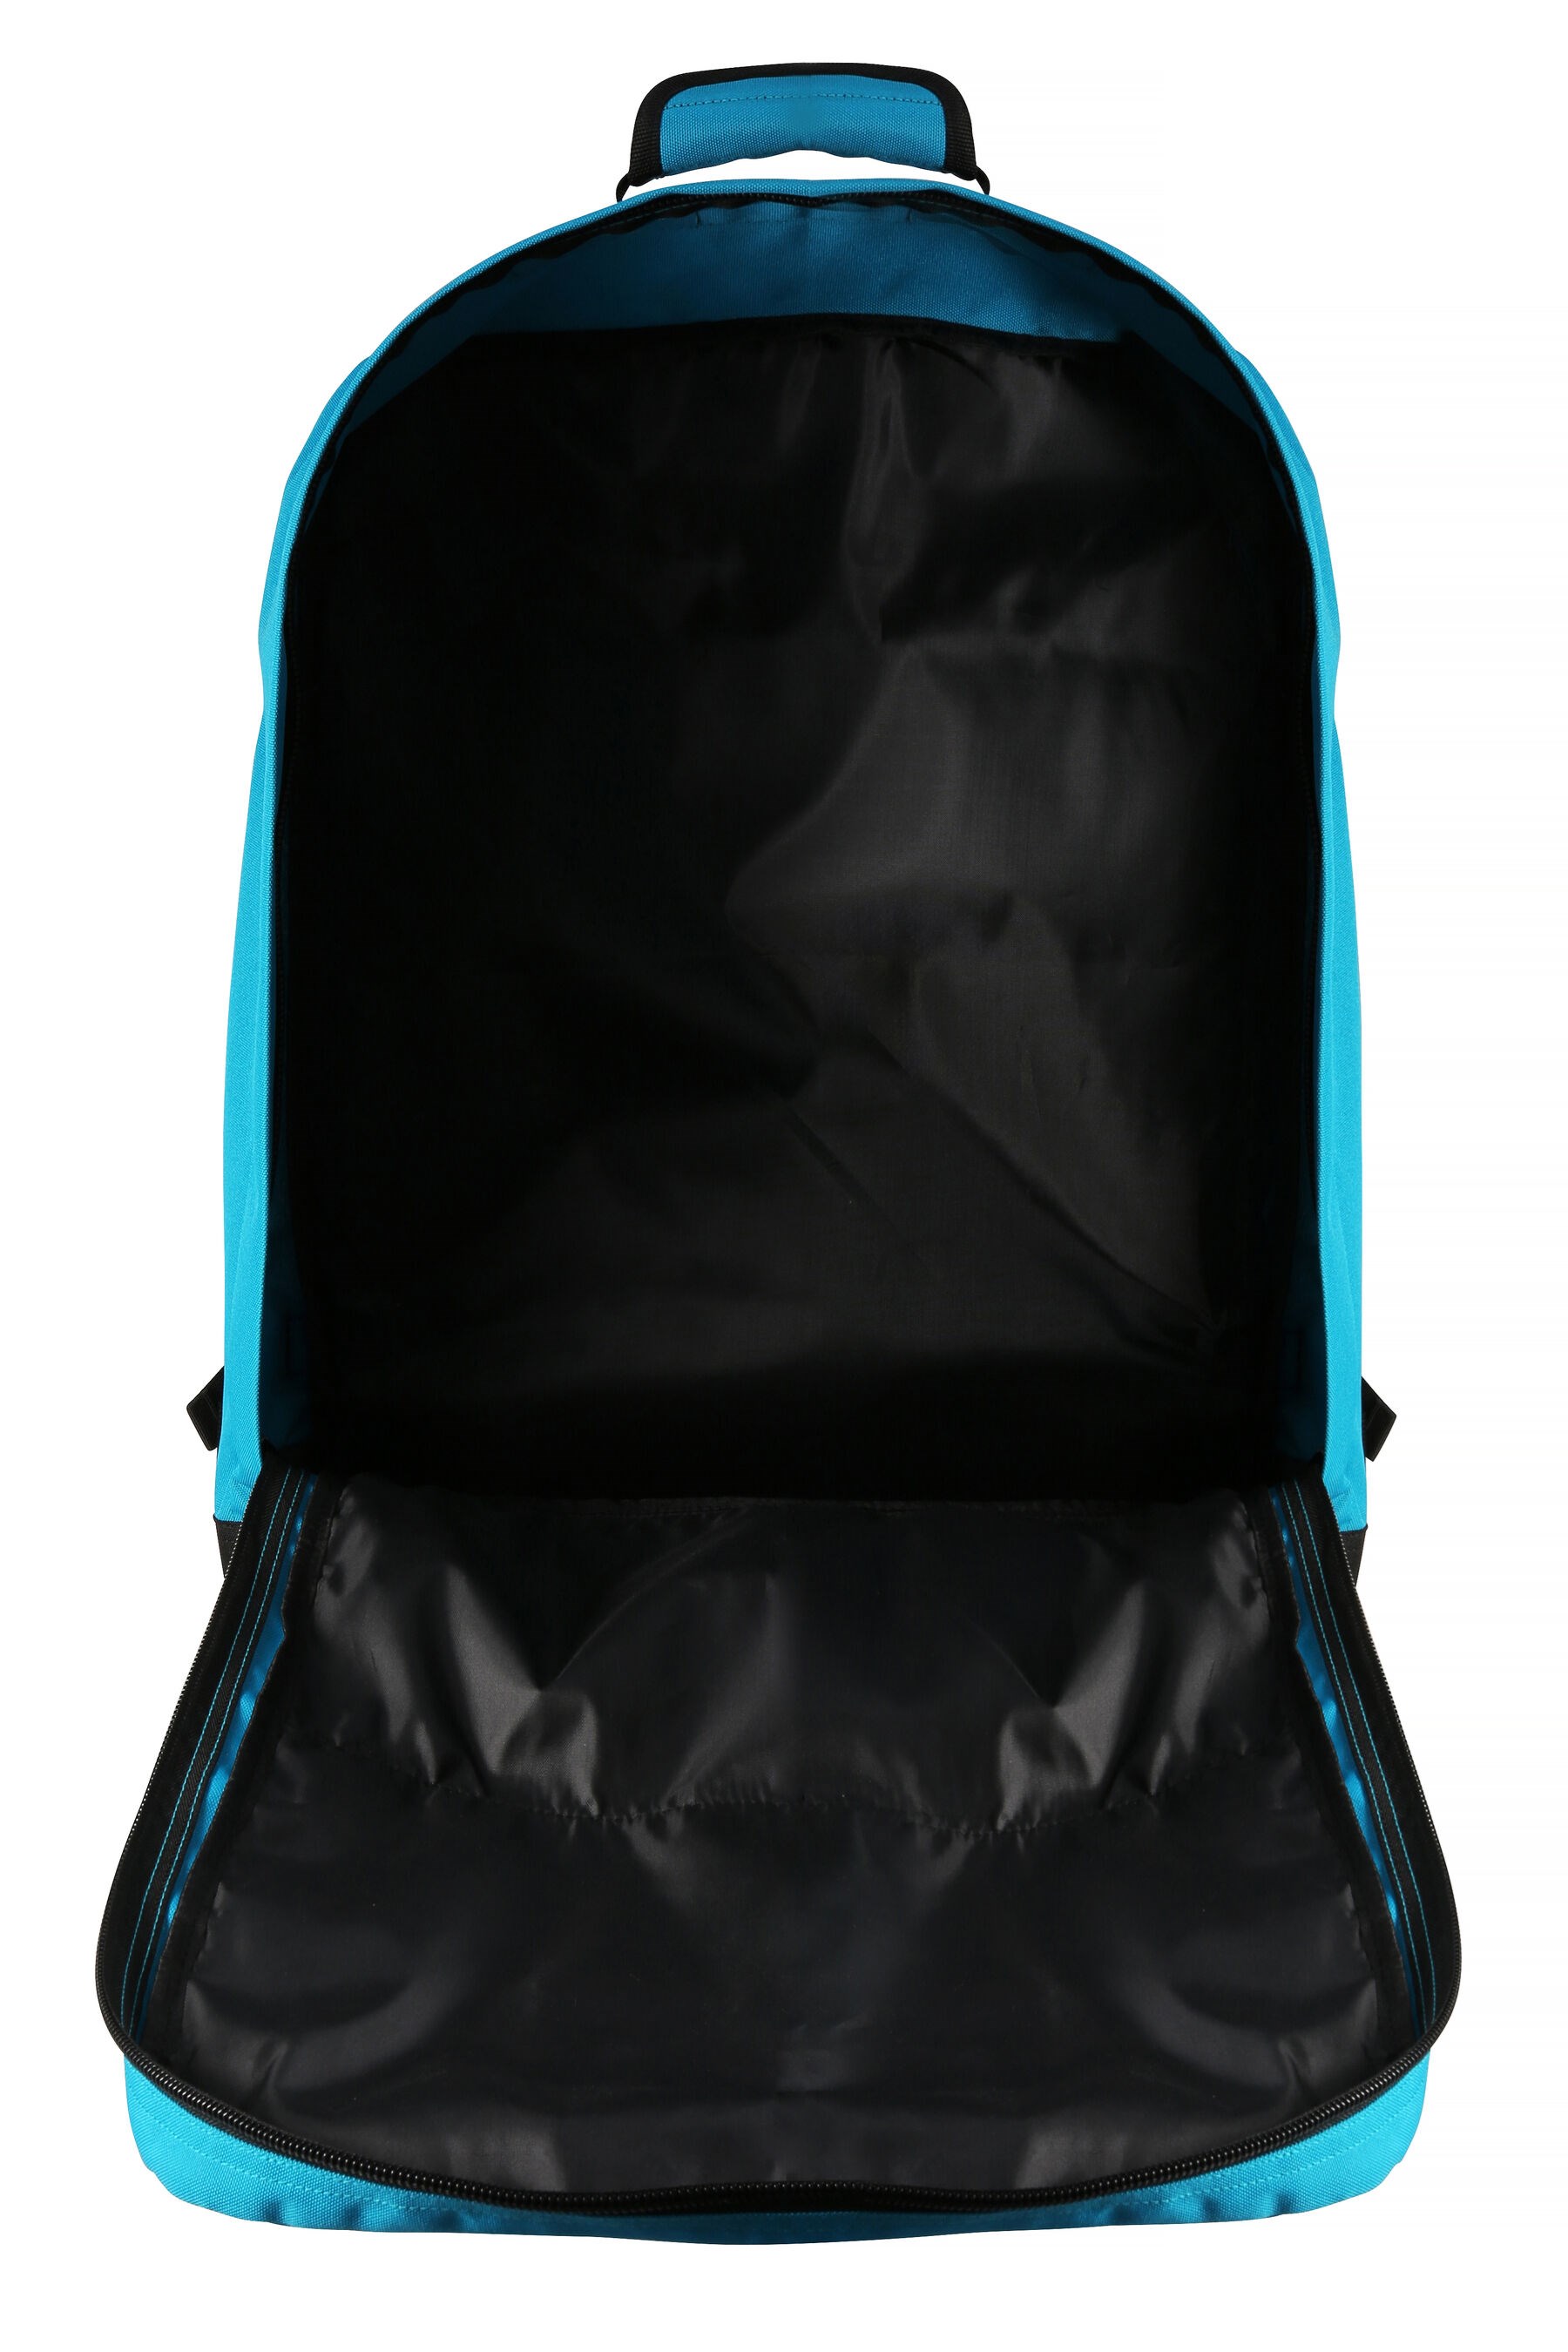 Metz 44L RPET Backpack 55x40x20cm